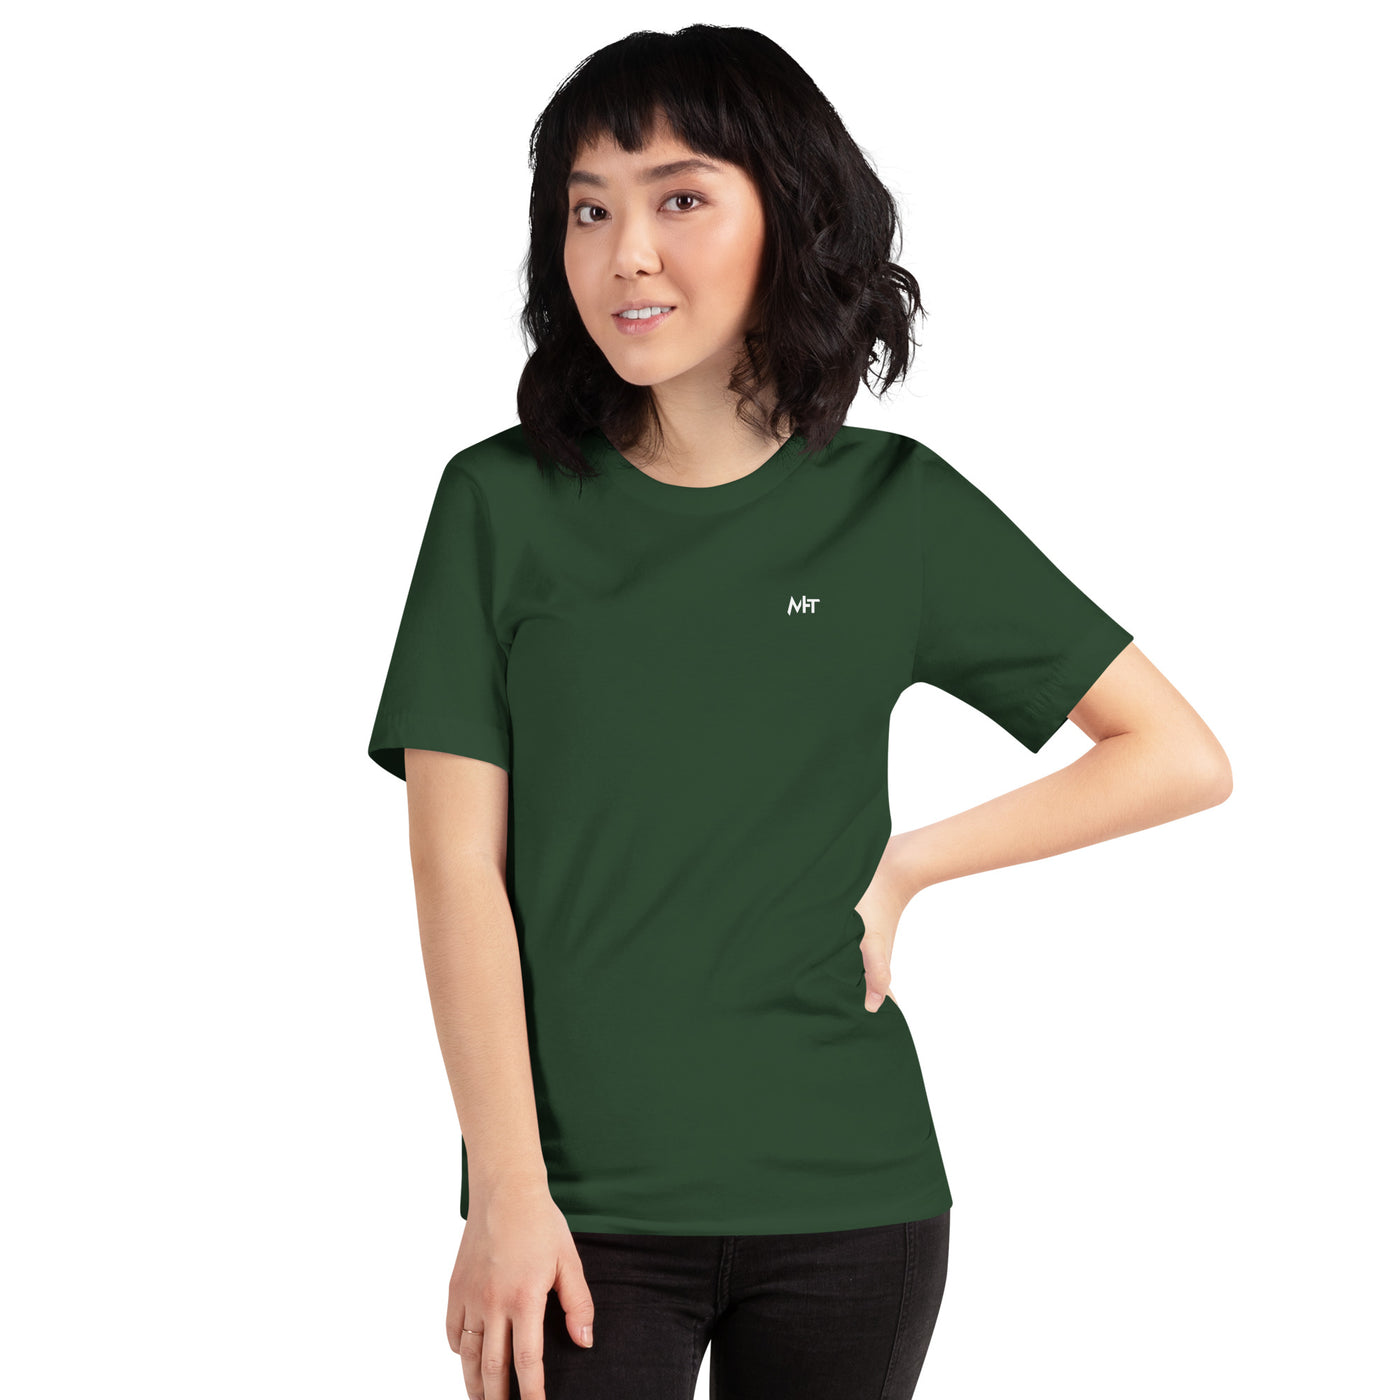 Trader - Unisex t-shirt ( Back Print )